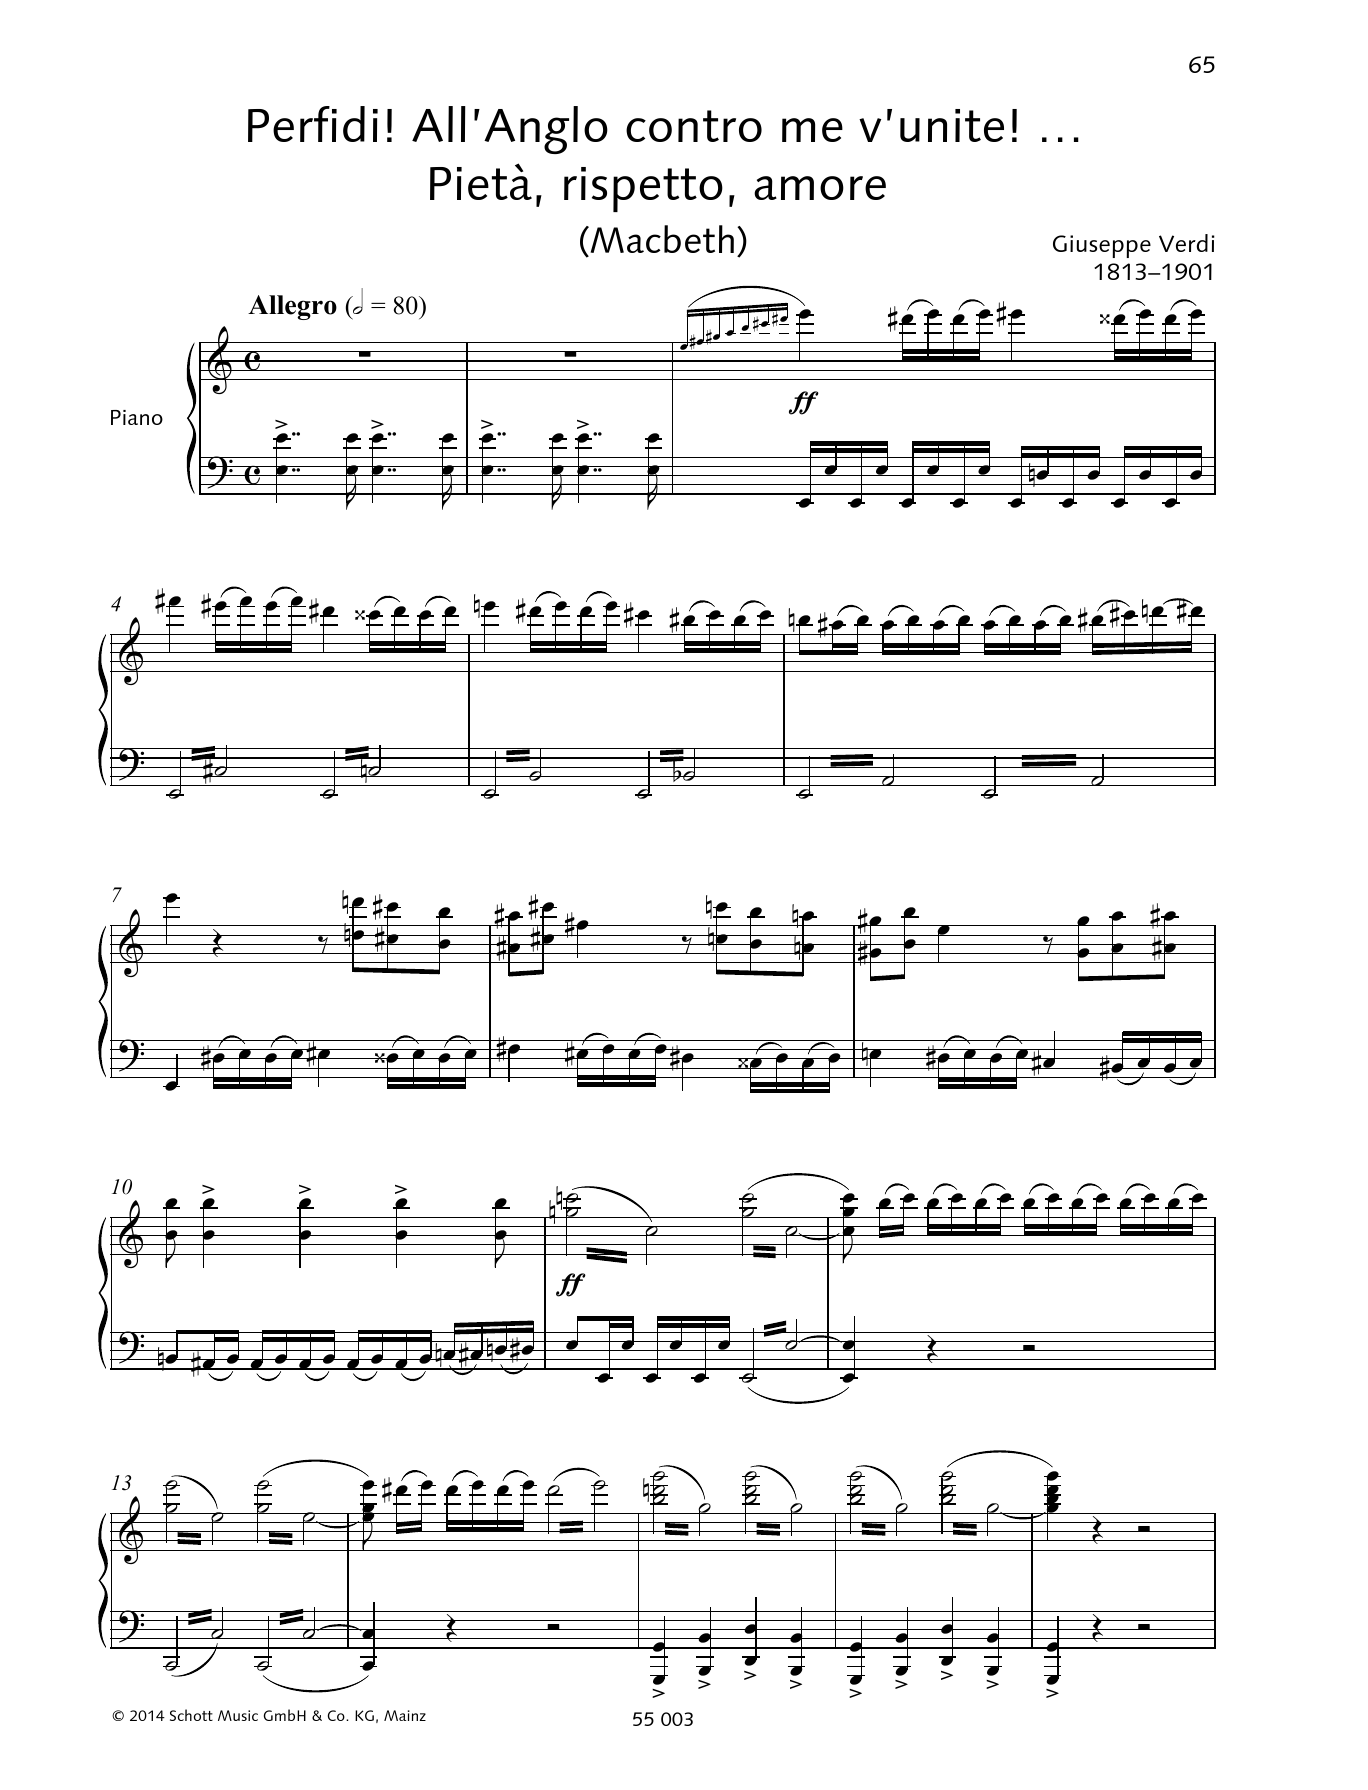 Giuseppe Verdi Perfidi! All'Anglo contro me v'unite!... Pietà, rispetto, amore sheet music notes and chords arranged for Piano & Vocal